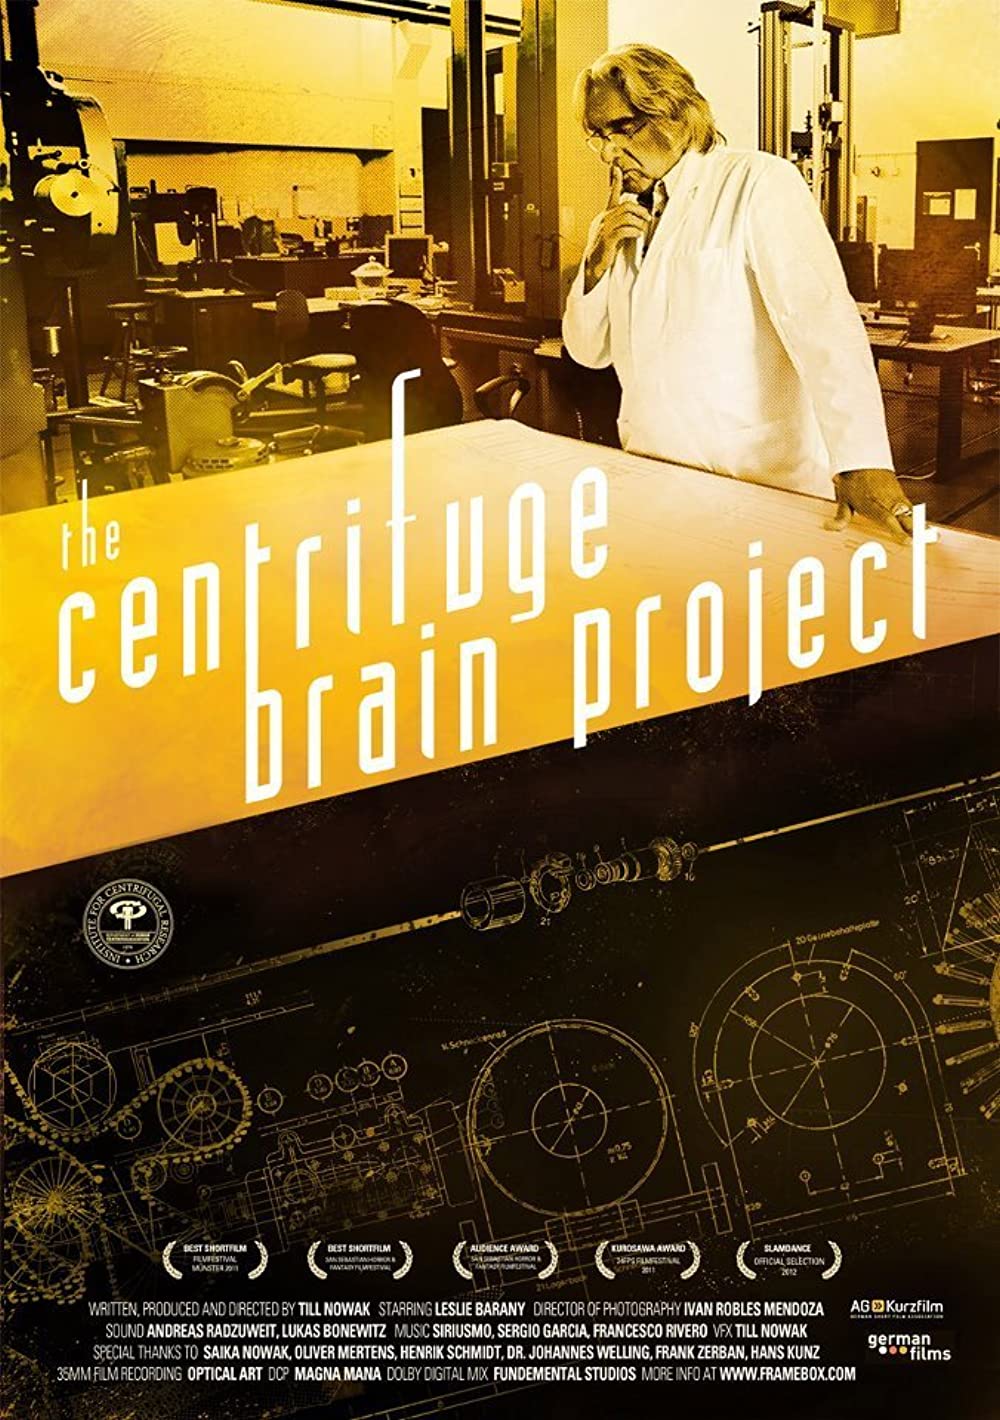 The Centrifuge Brain Project (Short 2012)